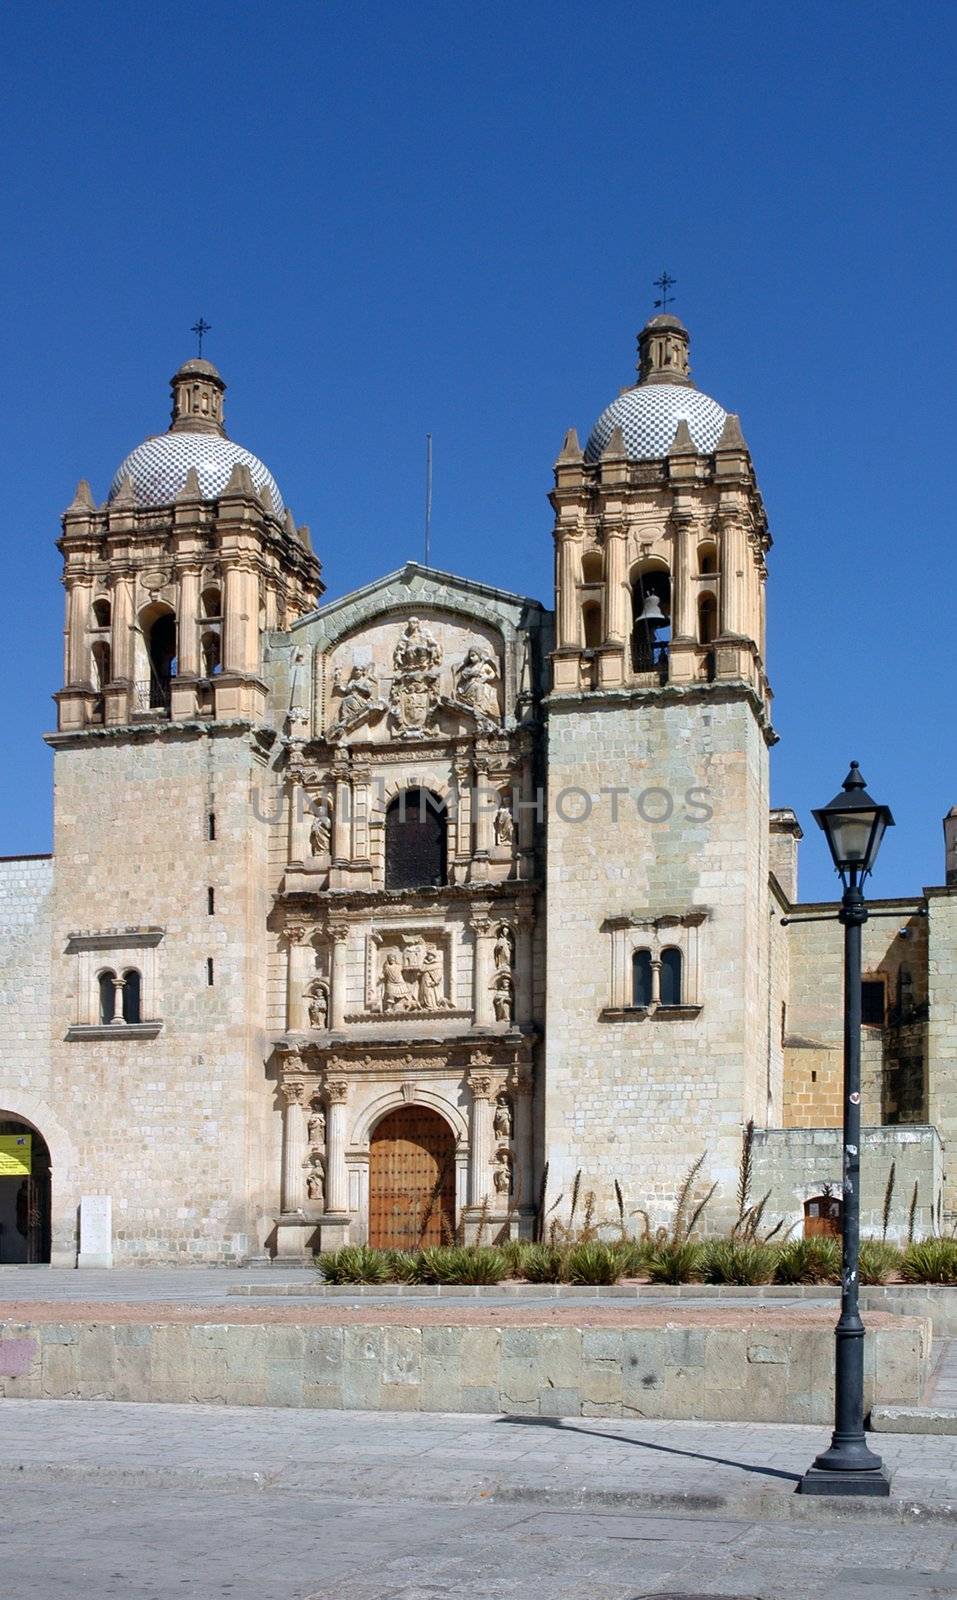 Cathedral in Oaxaca by haak78